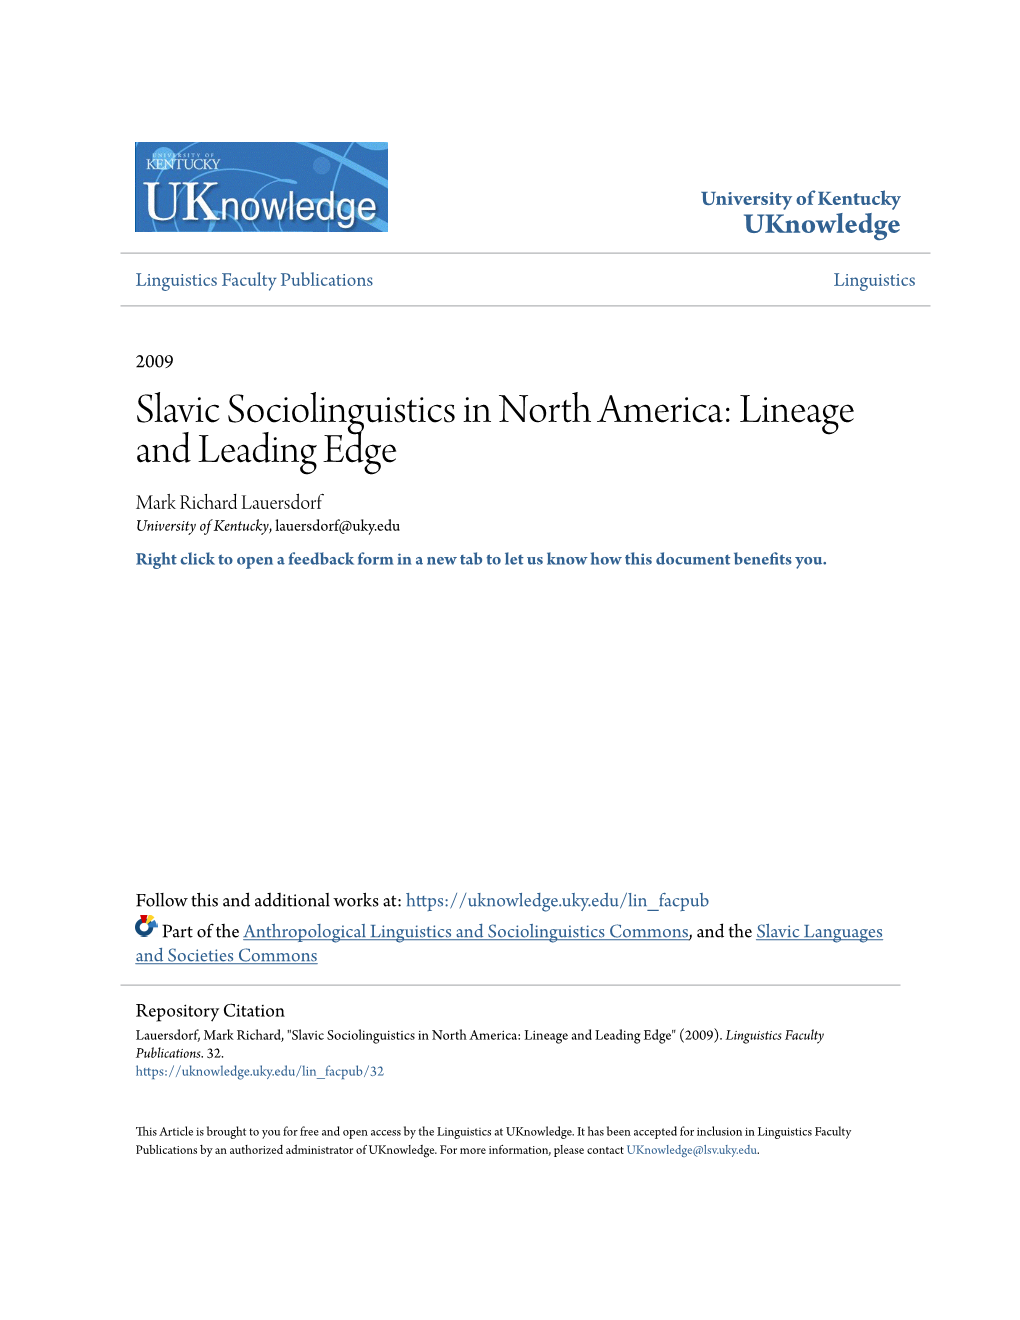 Slavic Sociolinguistics in North America